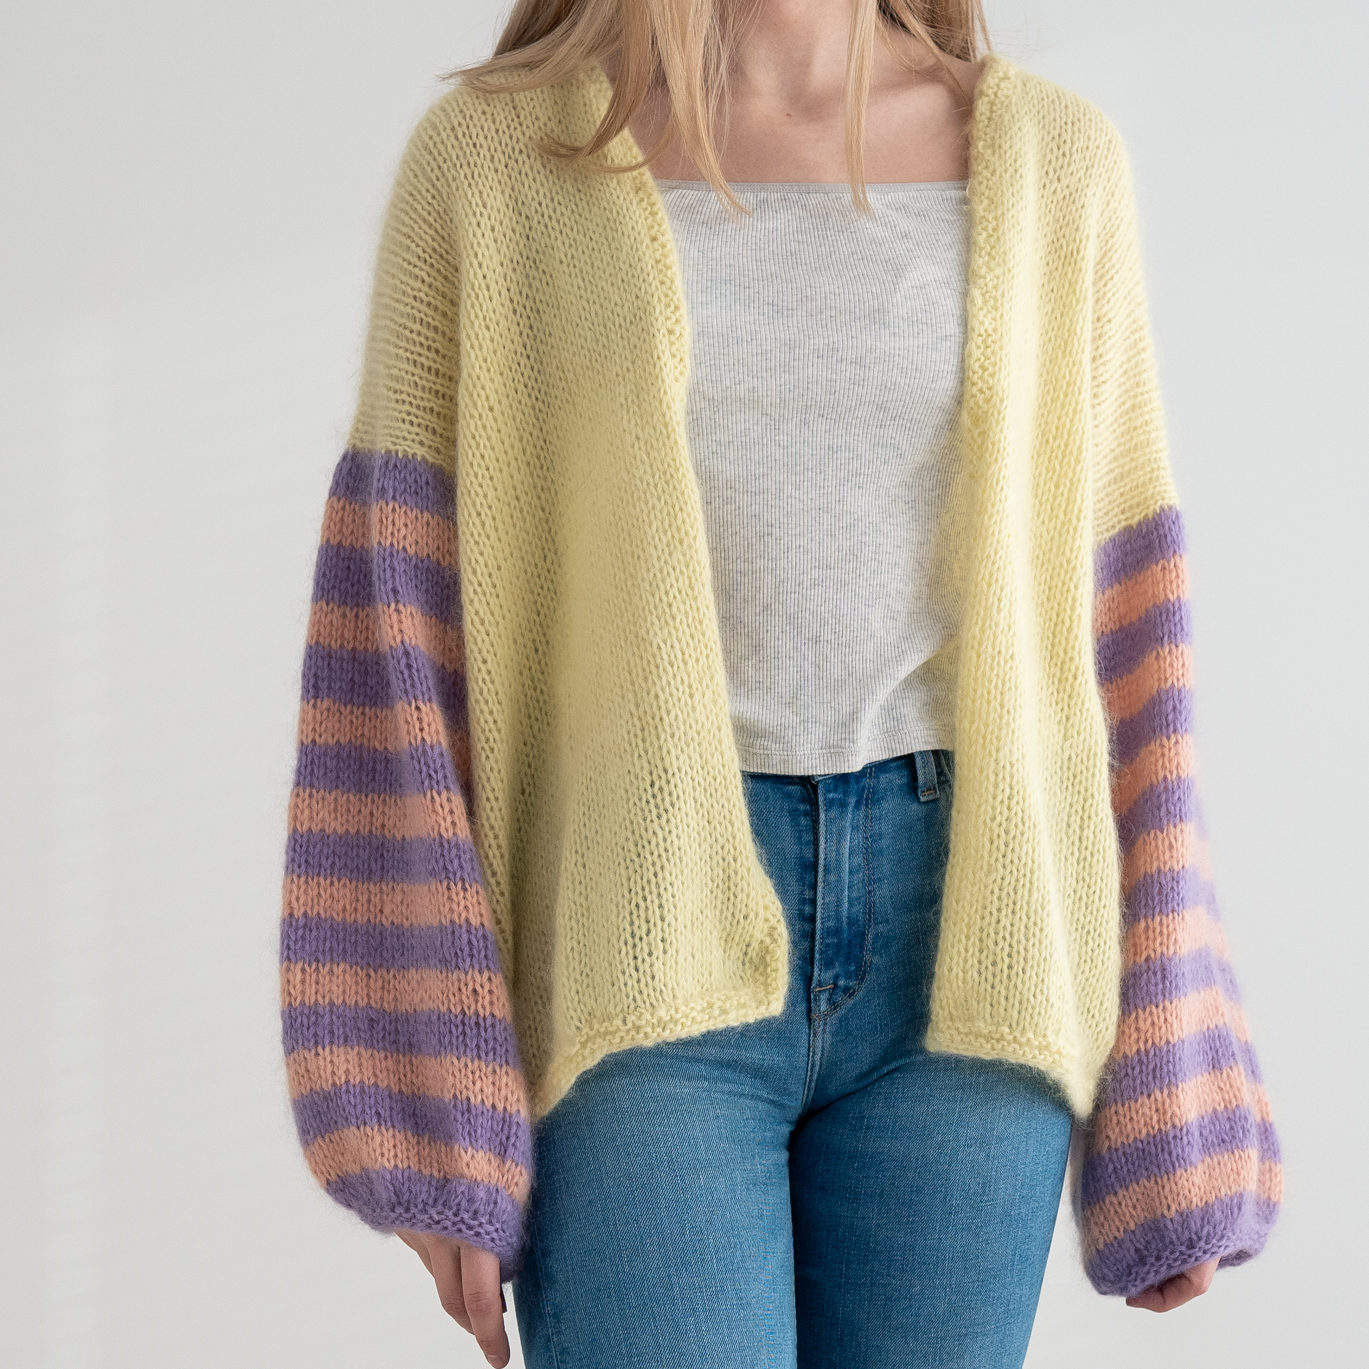  - Paradise jacket knitting kit | Knitted jacket with stripes - by HipKnitShop - 20/04/2020